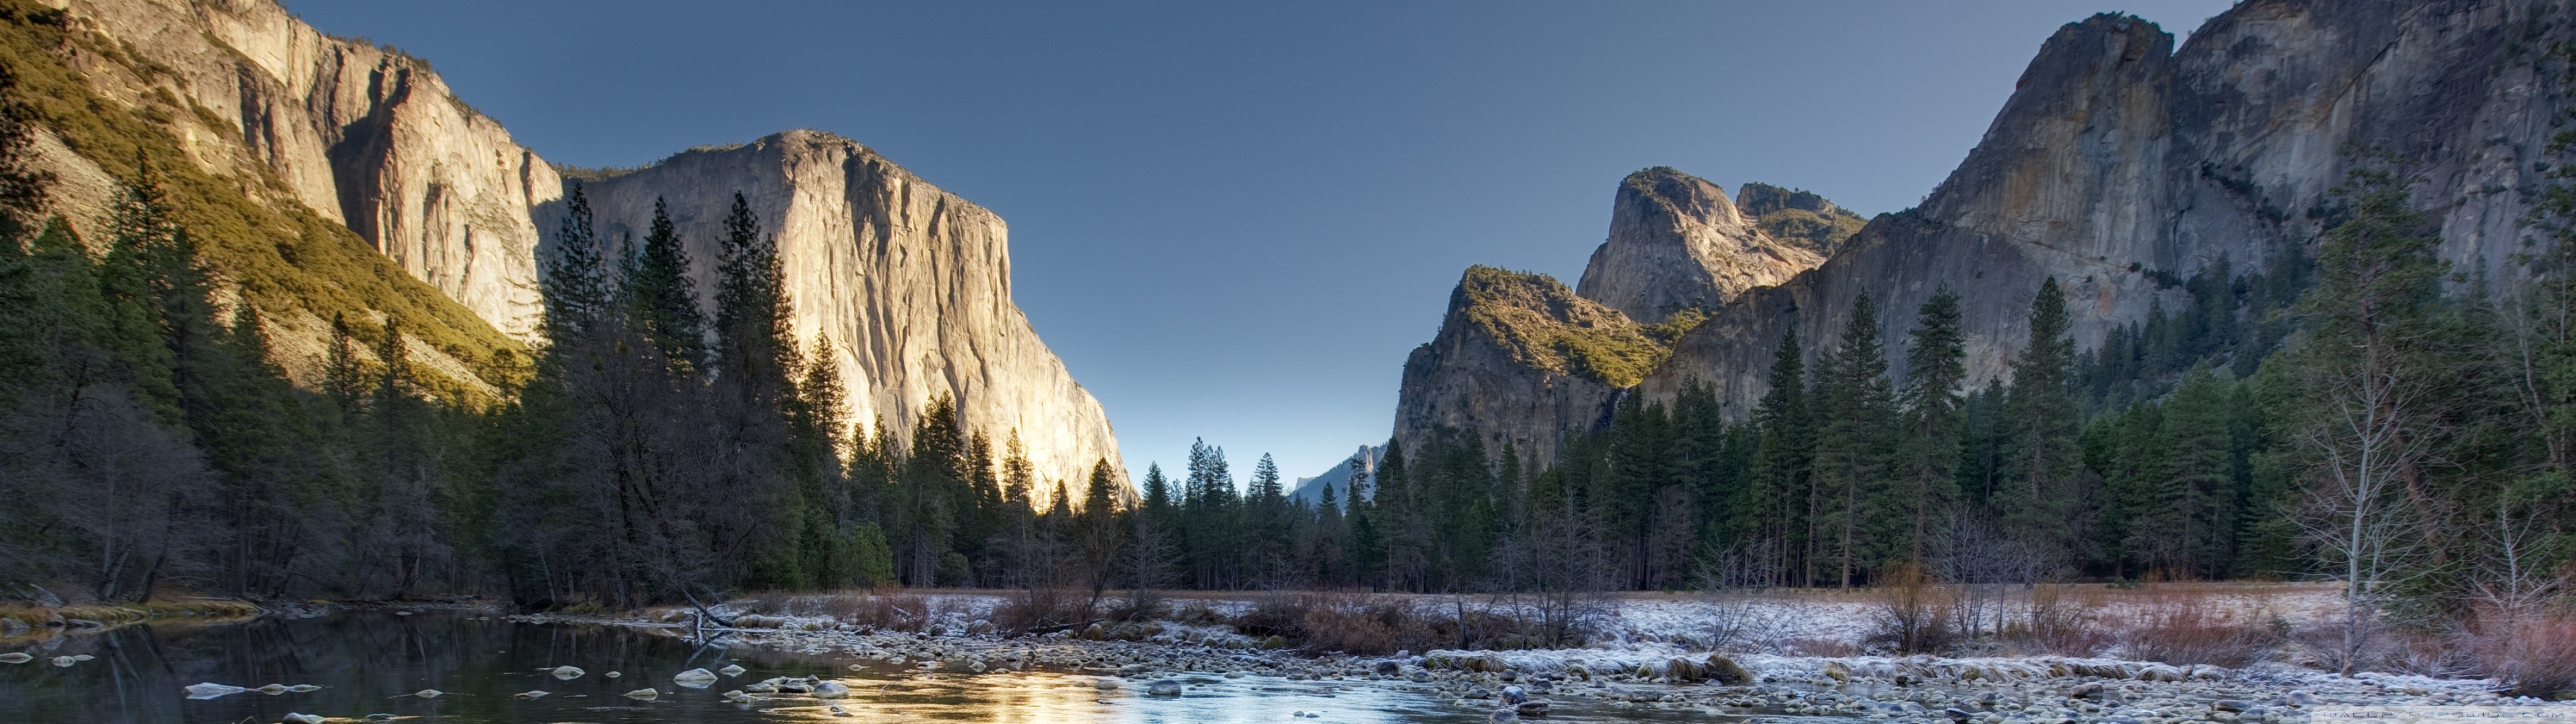 General 3840x1080 multiple display landscape Yosemite National Park nature USA rock formation California El Capitan